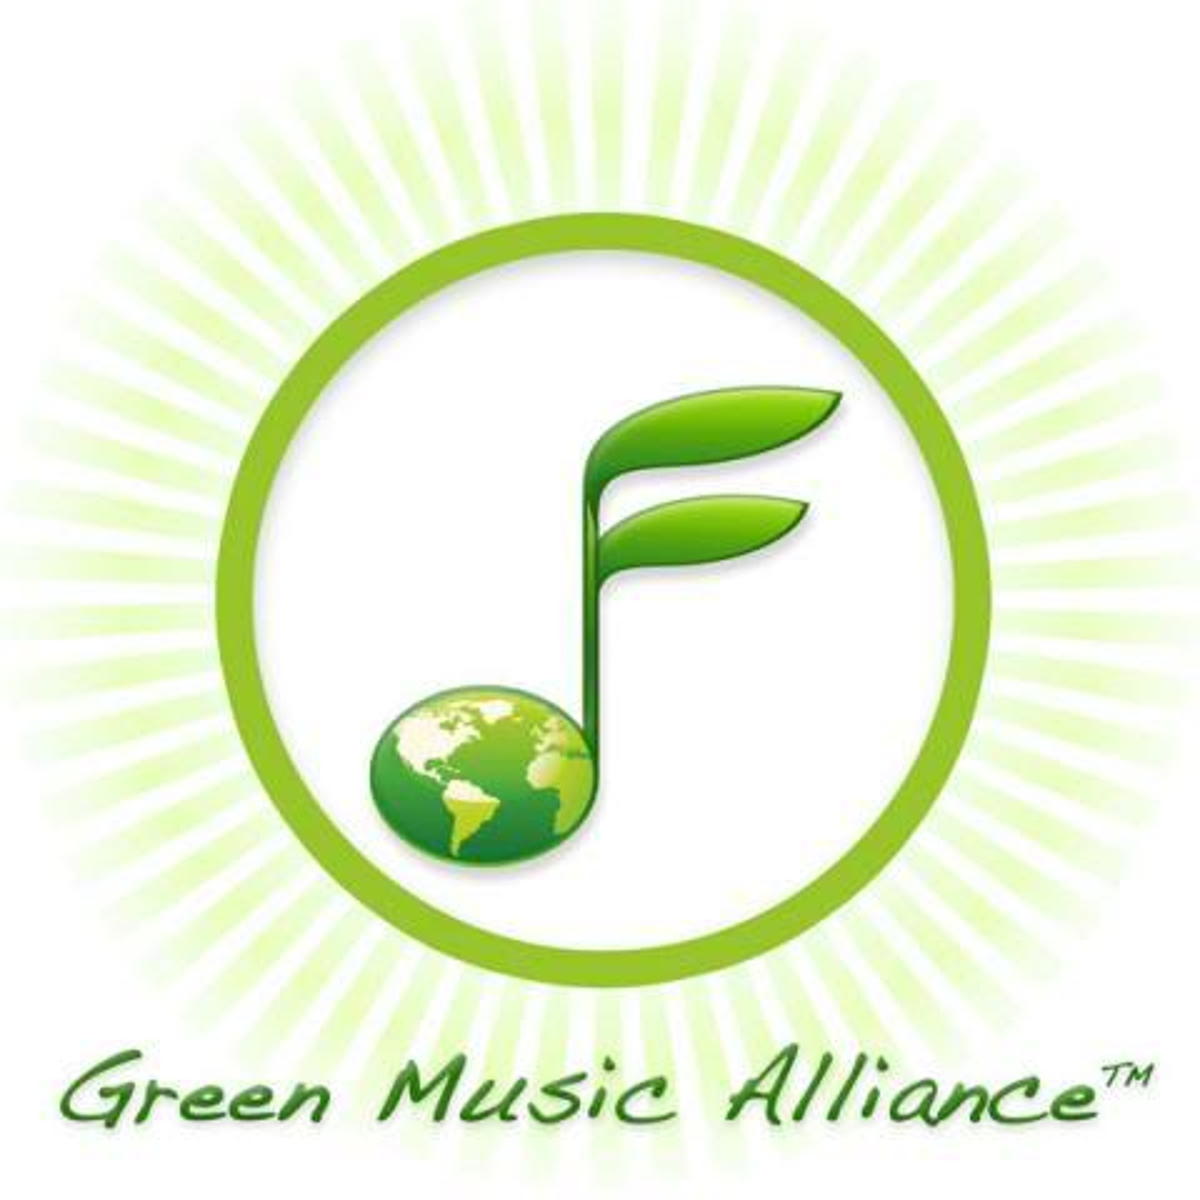 Green Music Alliance Logo (1)